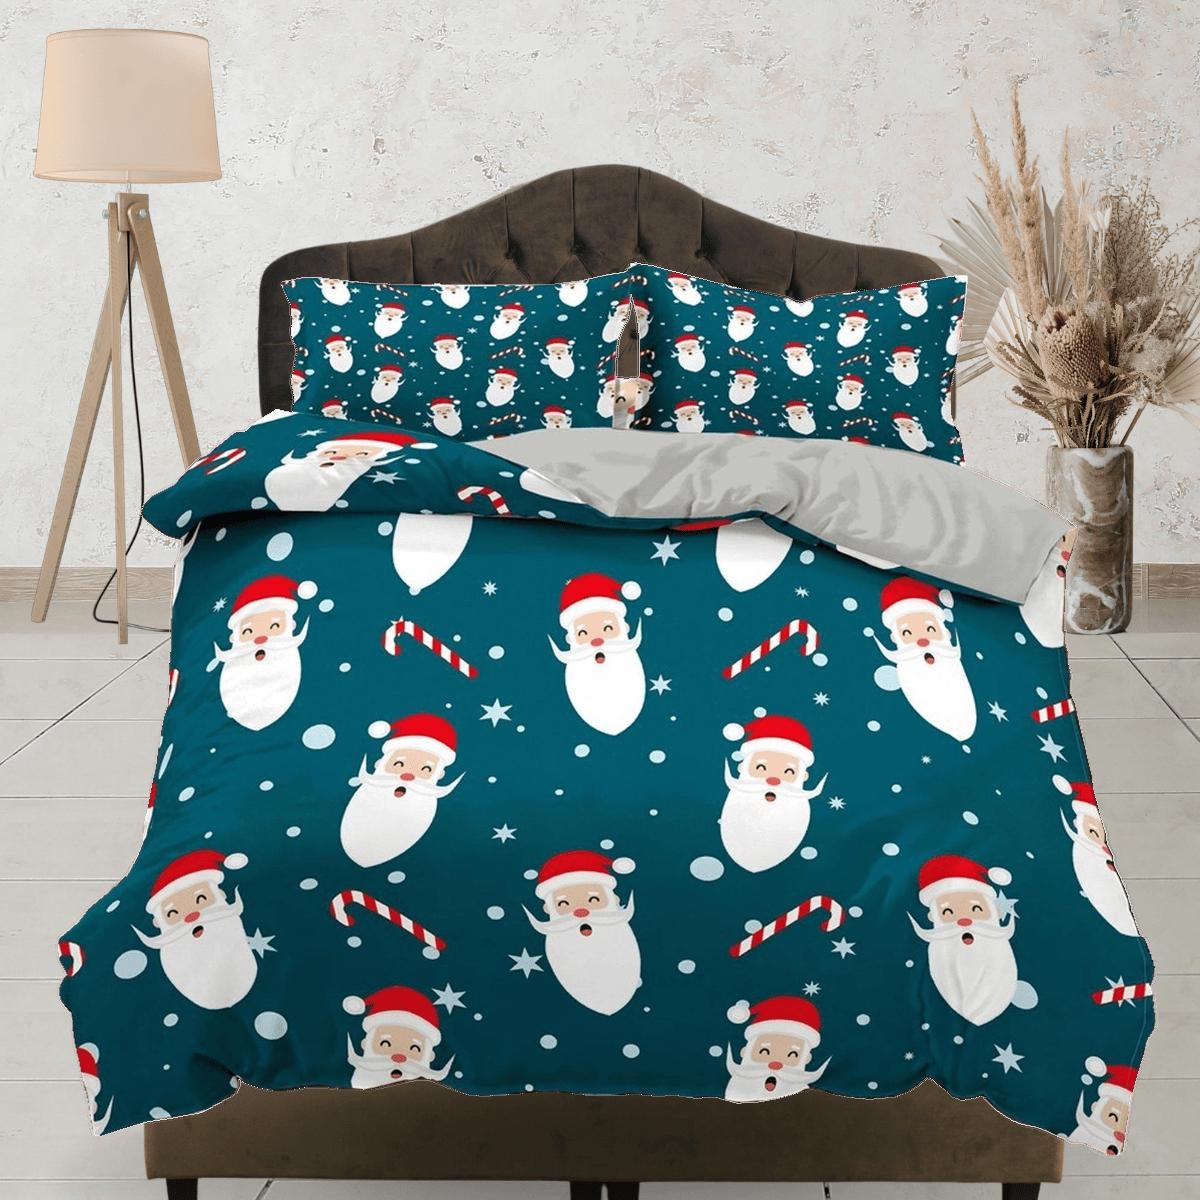 daintyduvet Santa Claus and candy cane Christmas bedding & pillowcase holiday gift duvet cover king queen toddler bedding baby Christmas farmhouse decor